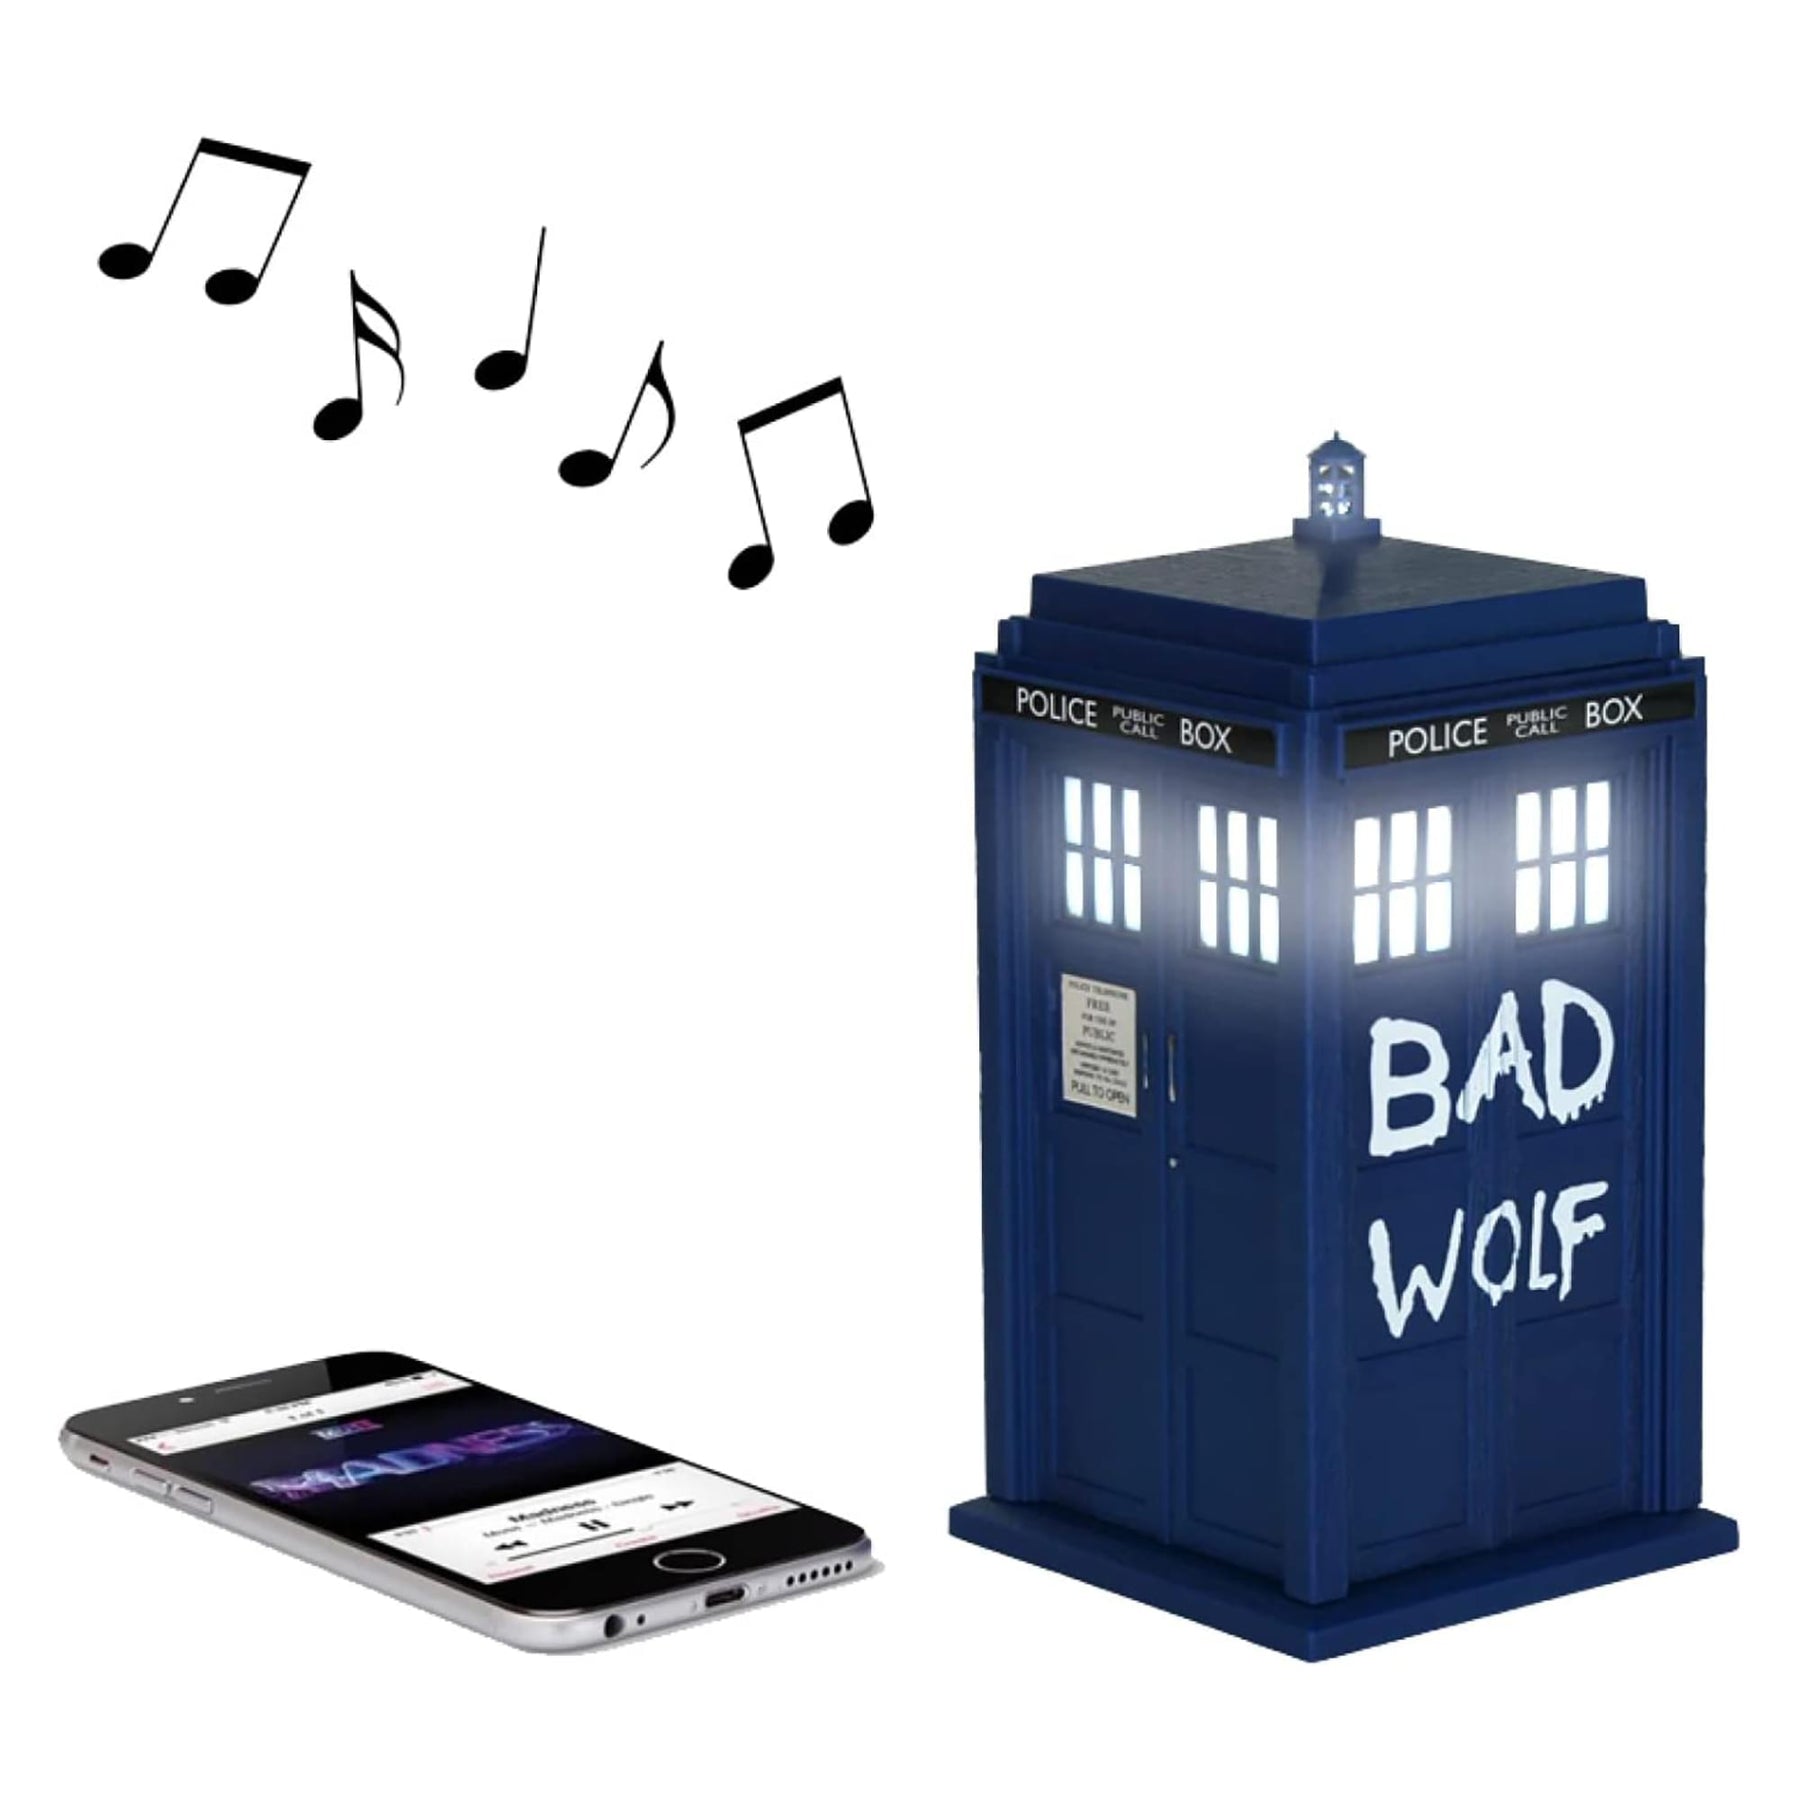 Doctor Who Bad Wolf TARDIS Wireless Bluetooth Speaker